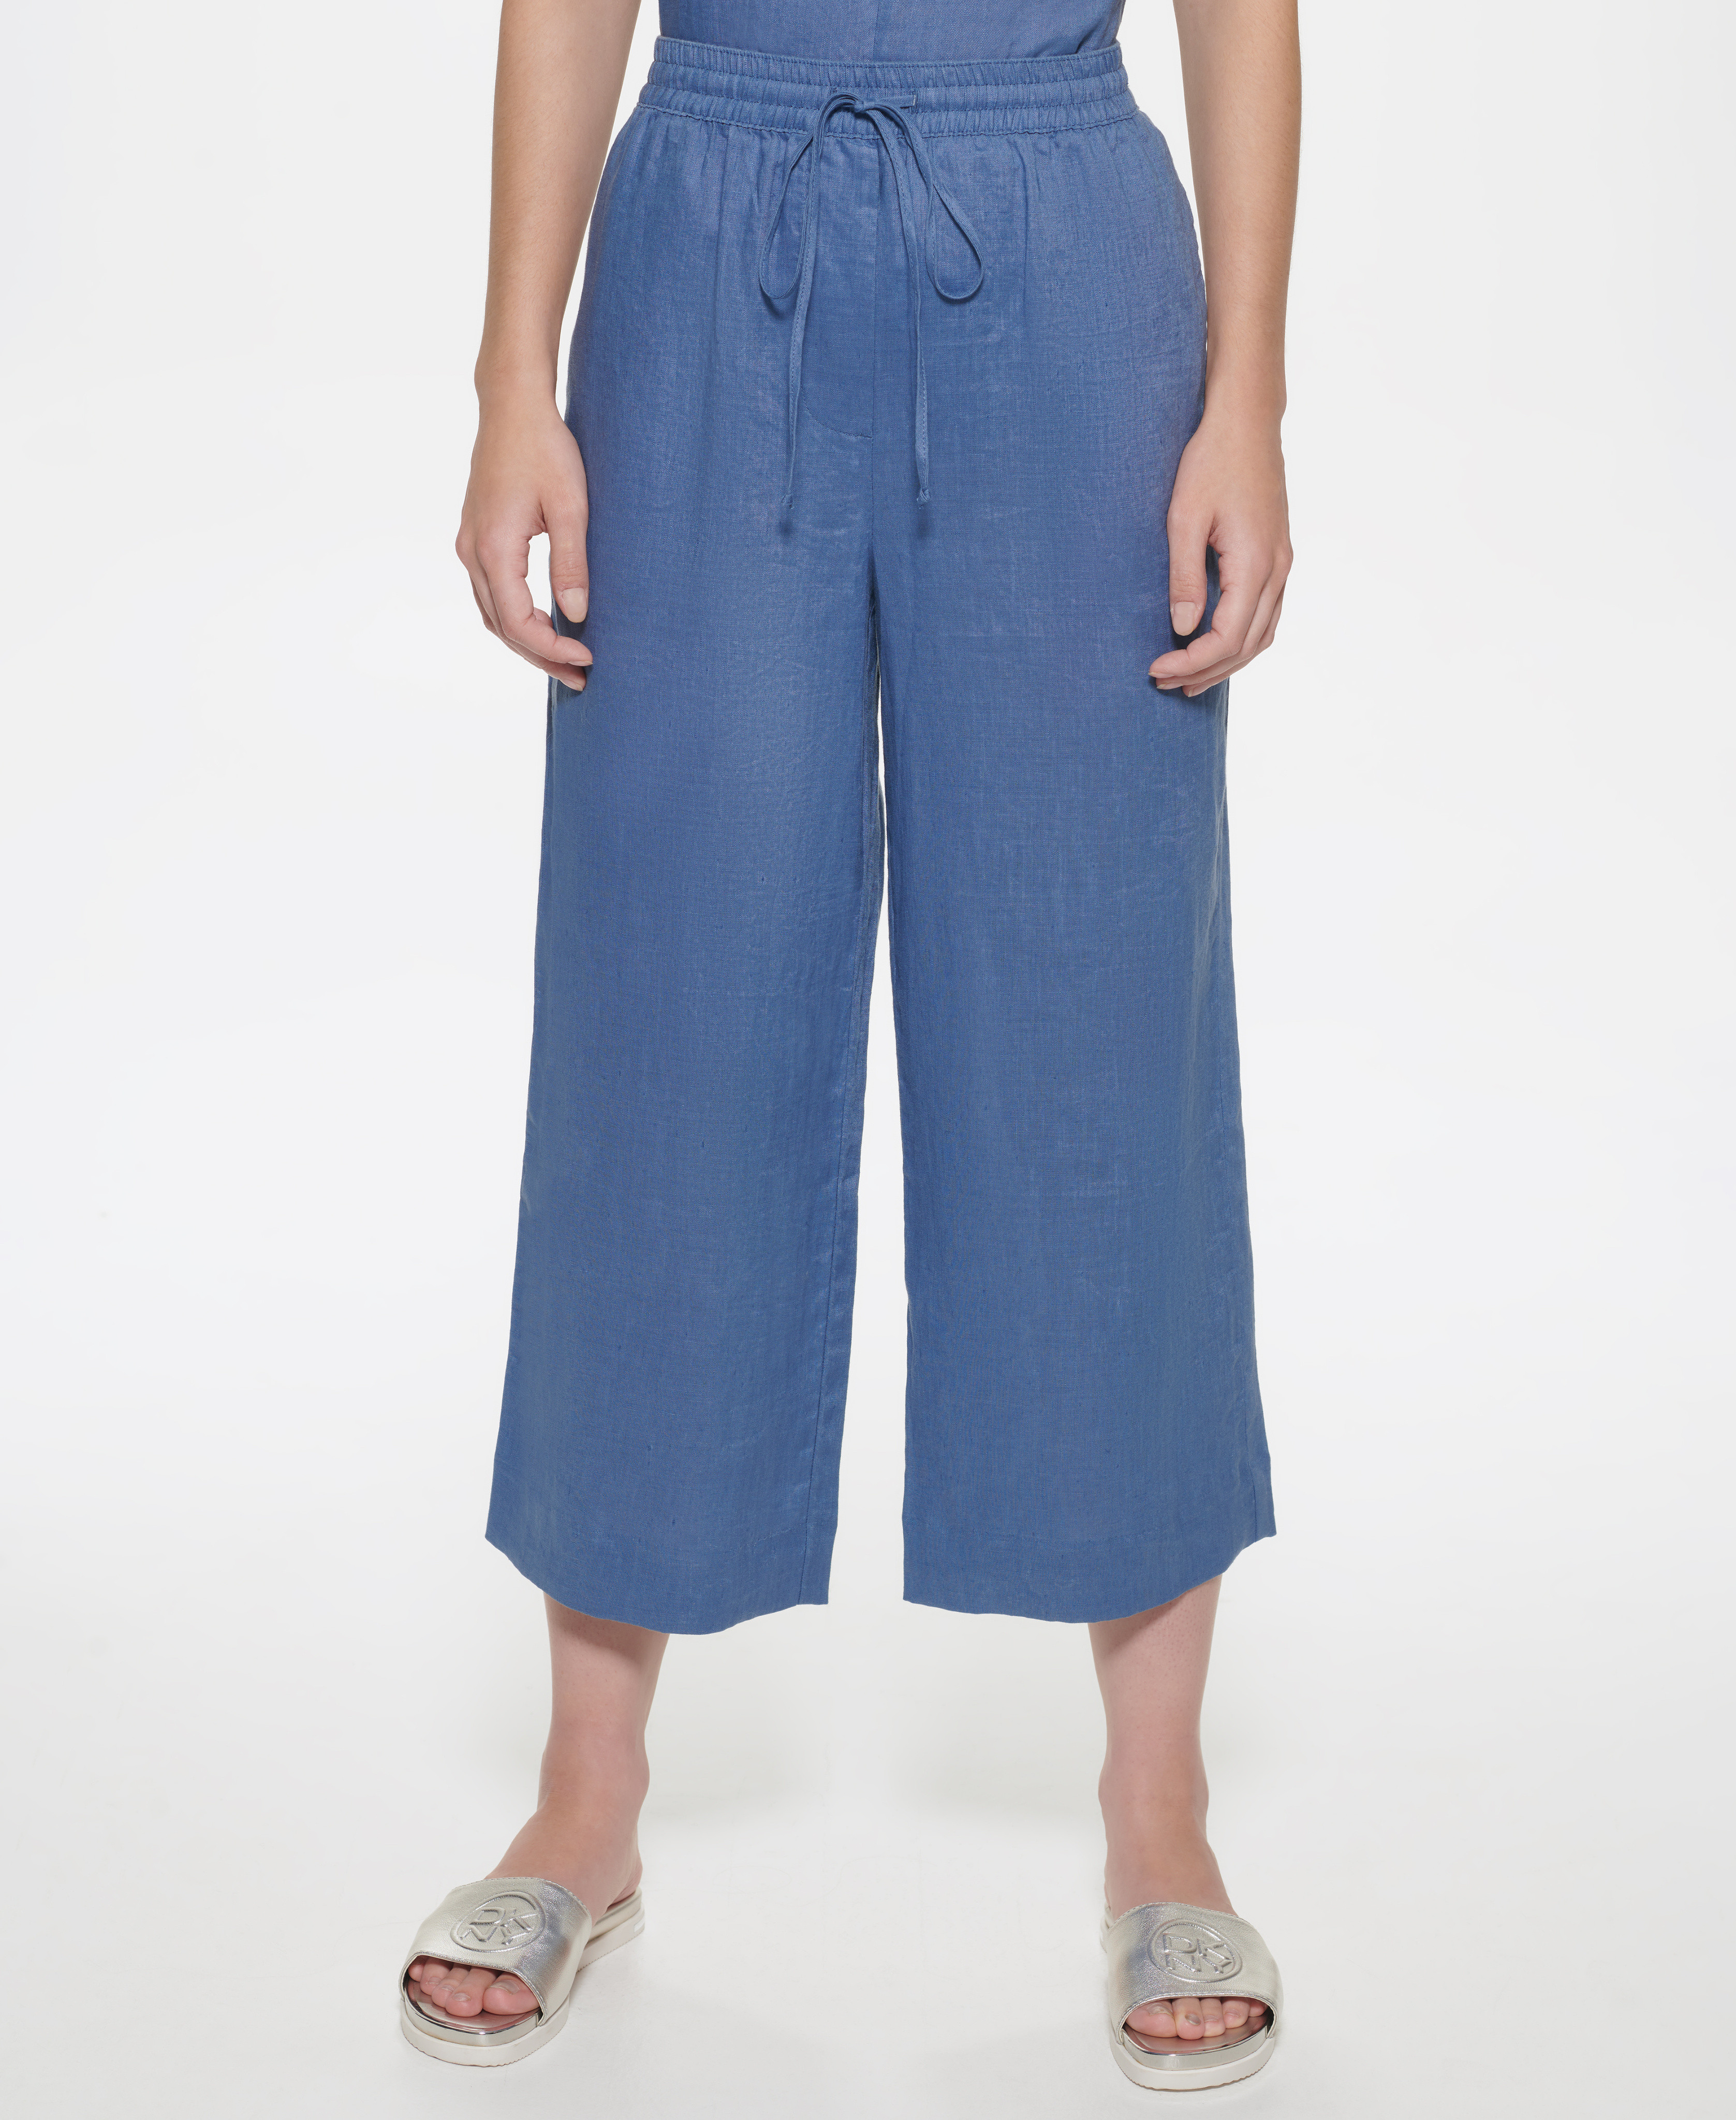 Pantalone a gamba ampia in lino, Blu, large